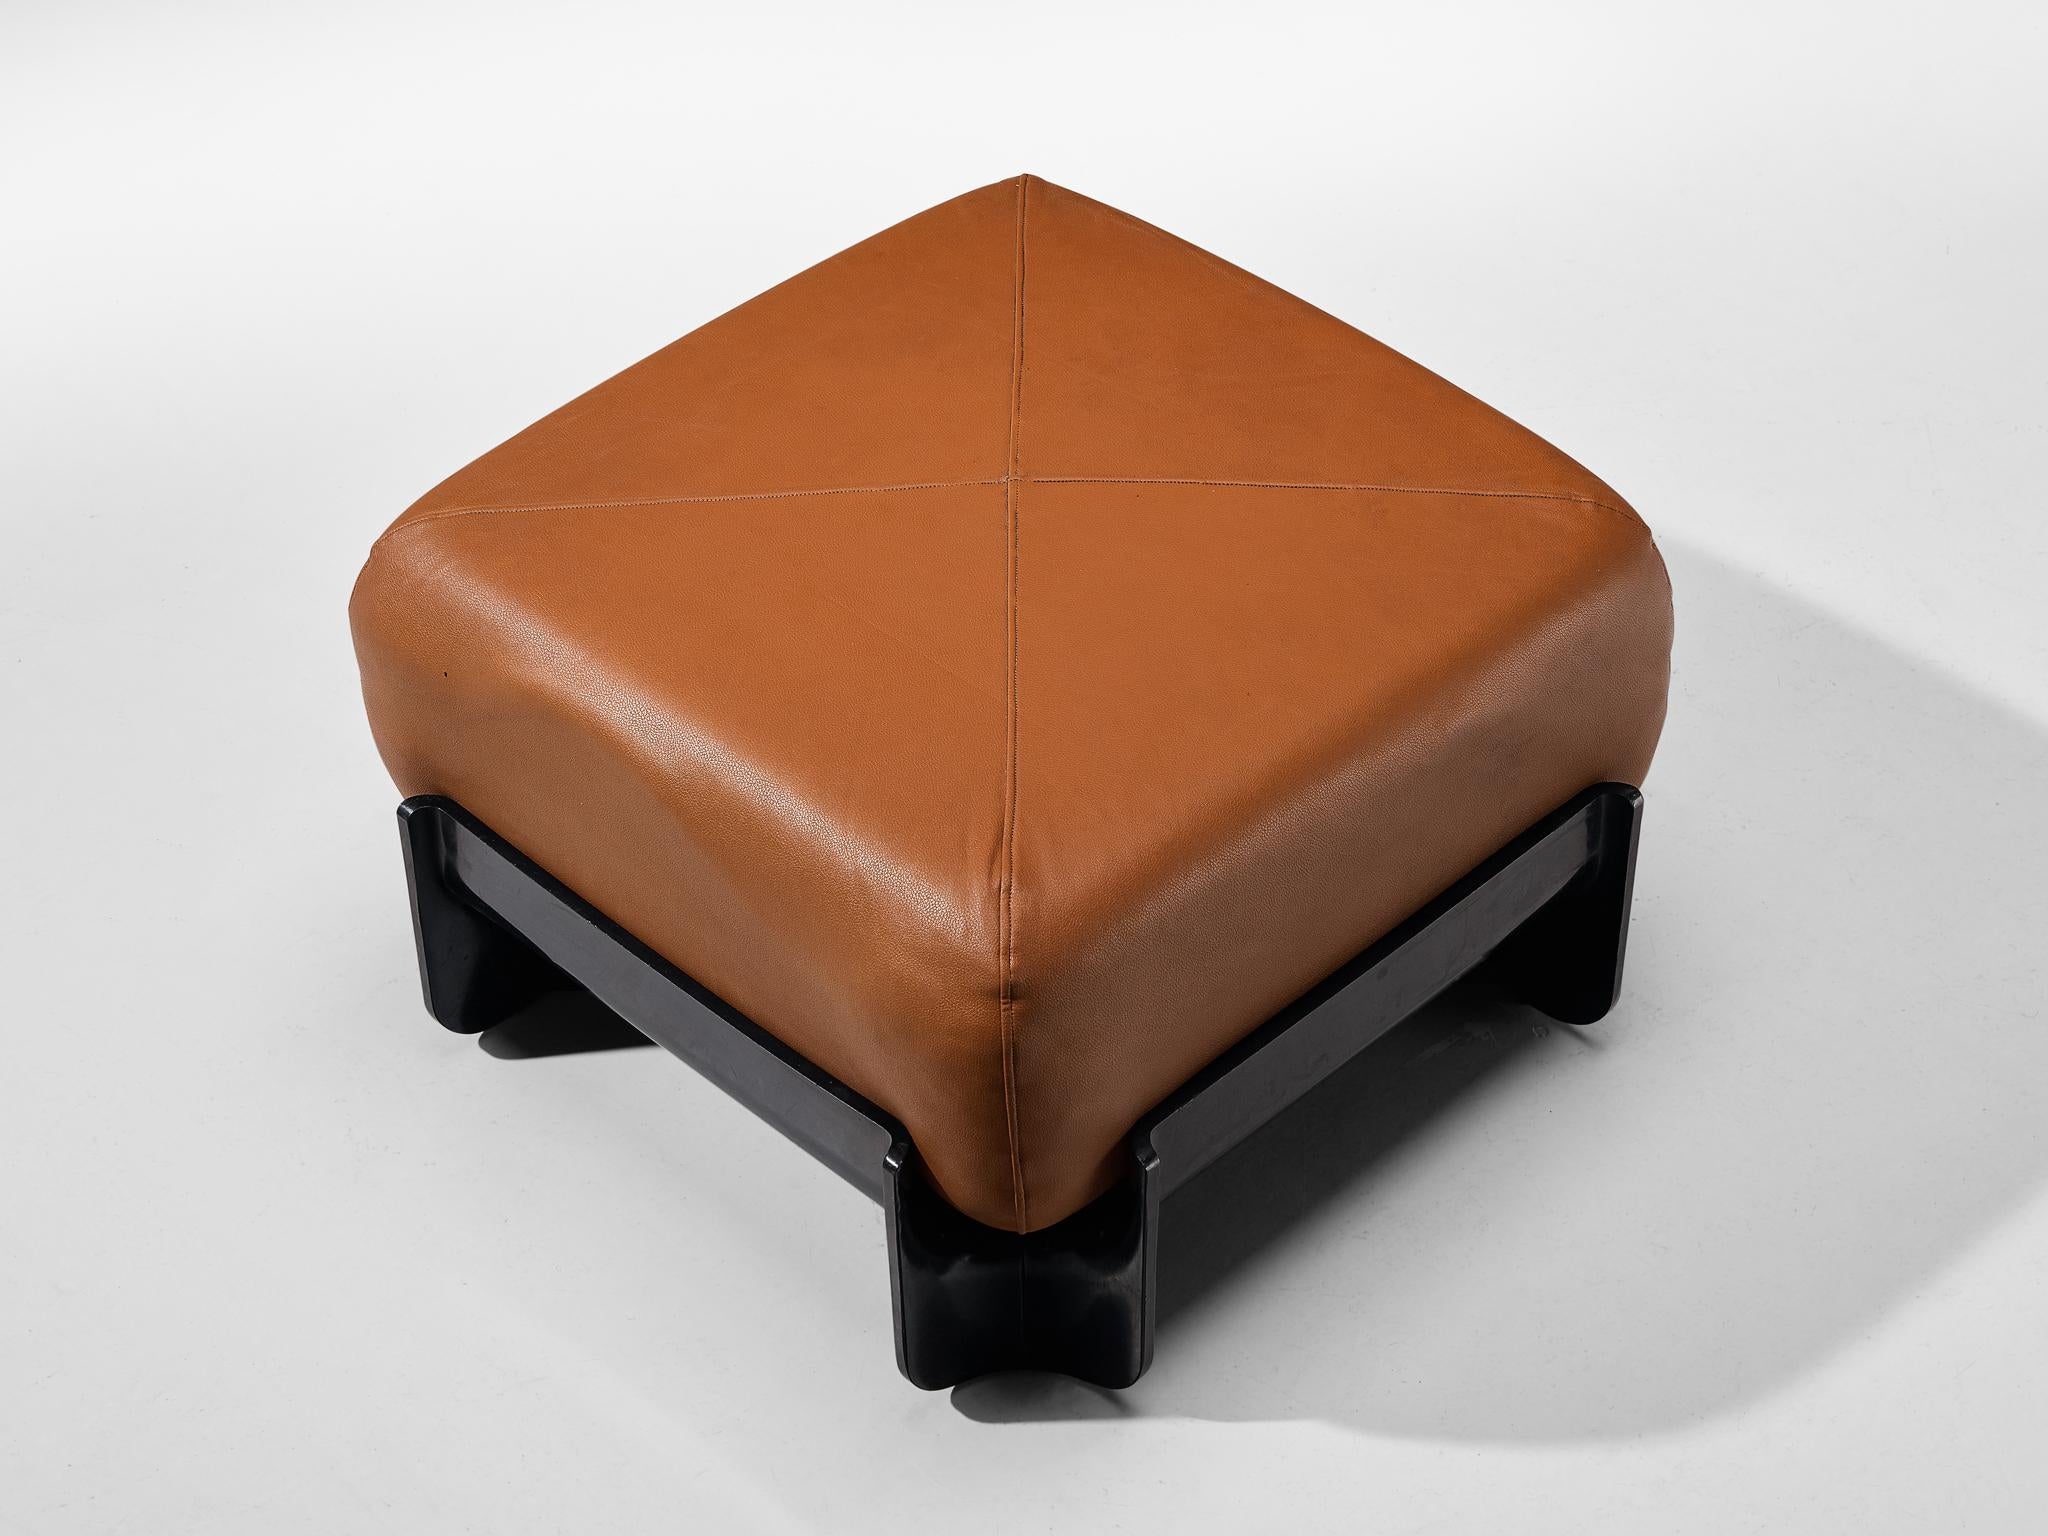 Faux Leather Guarnacci, Padovano & Claudio Vagnoni 'Duna' Lounge Chairs with Ottoman